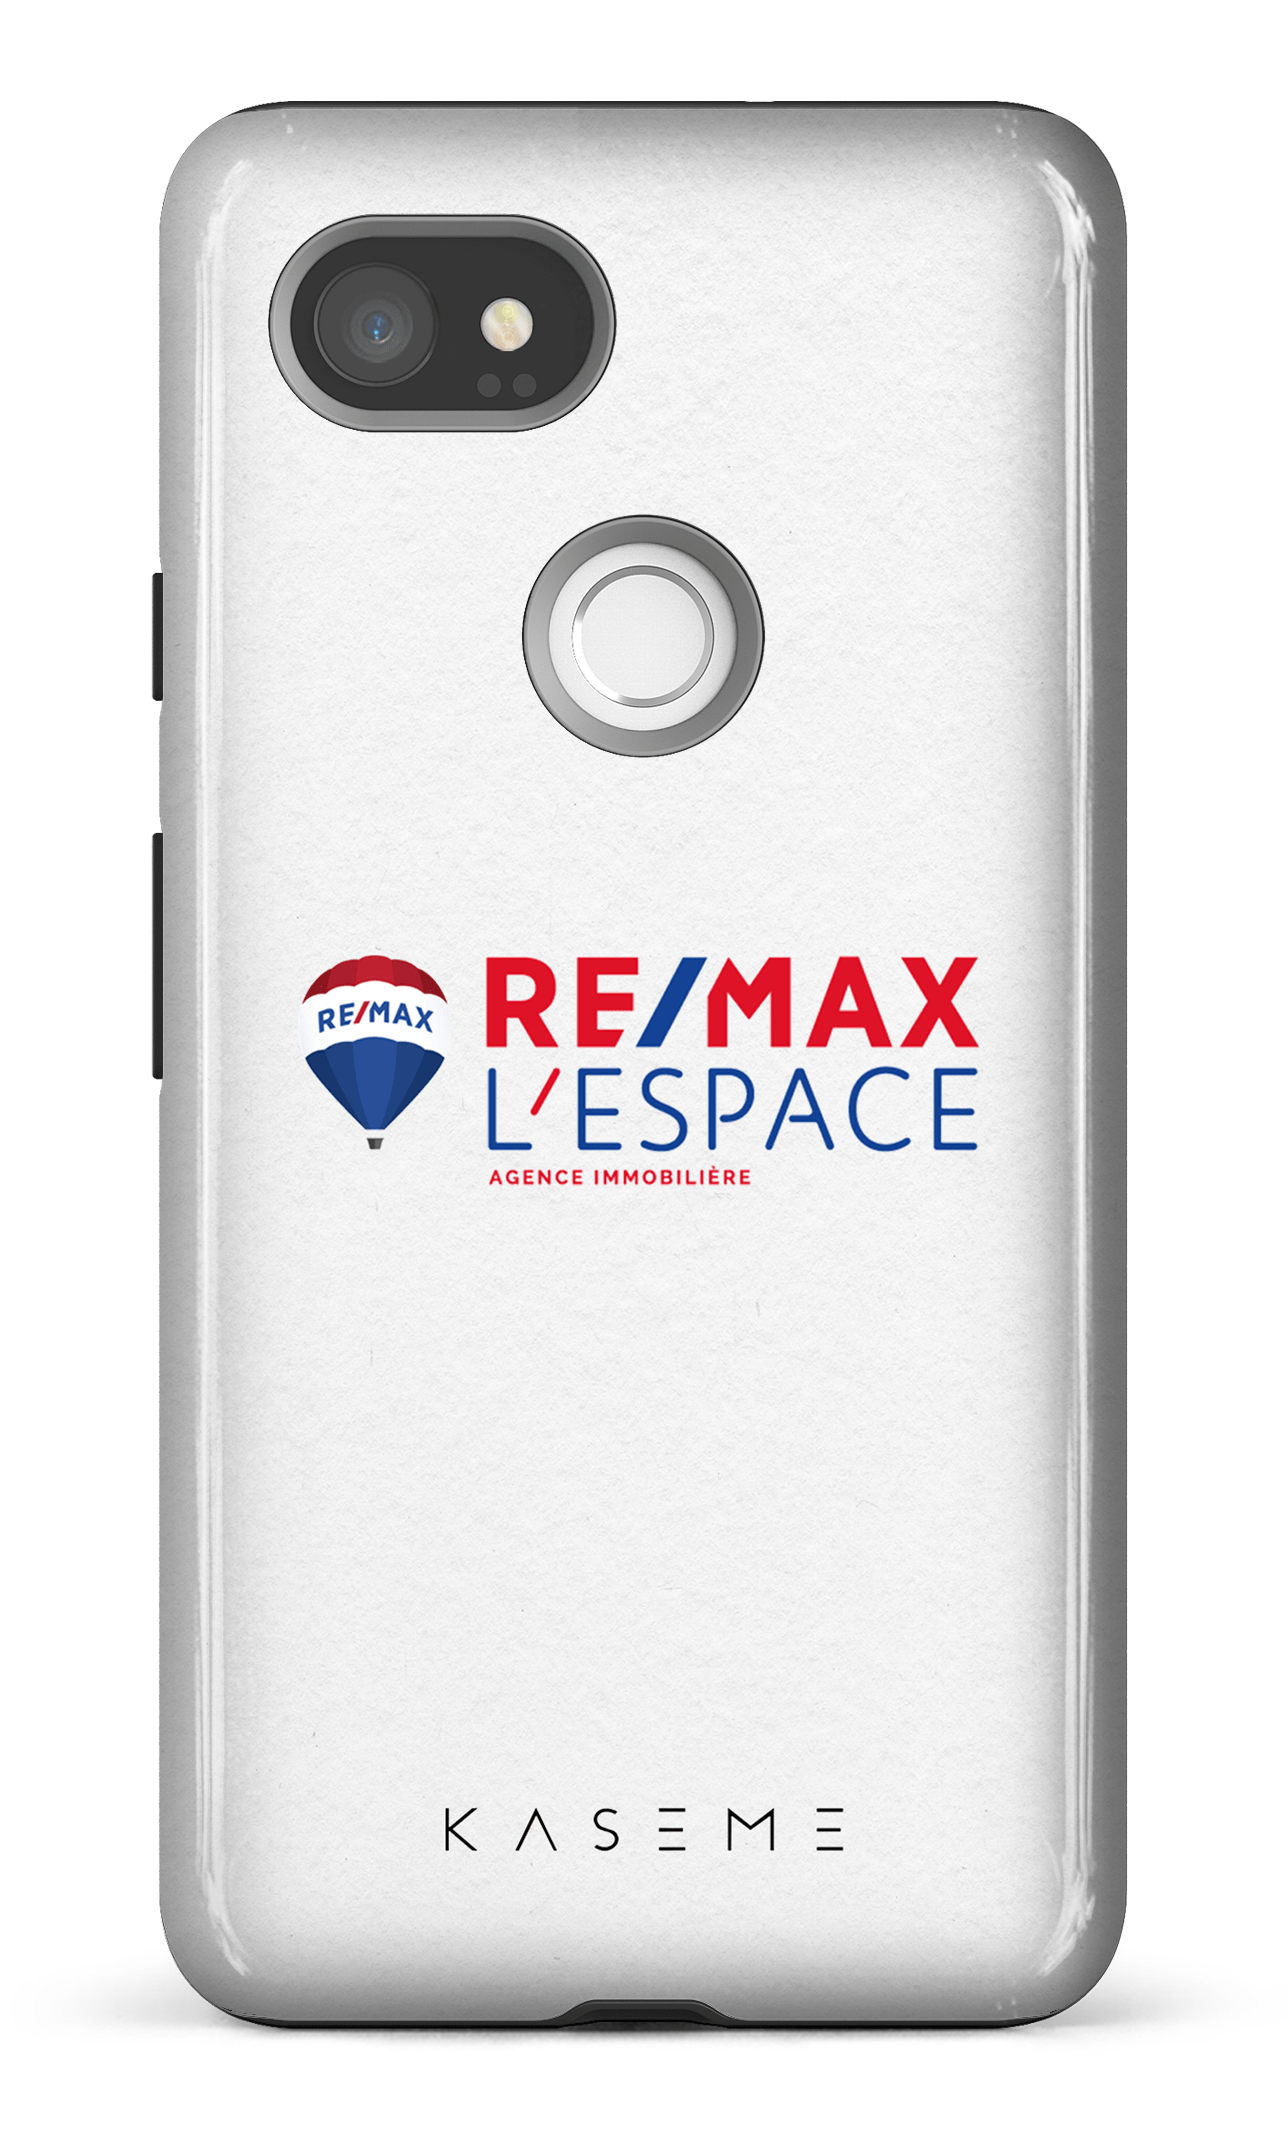 Remax L'Espace Blanc - Google Pixel 2 XL